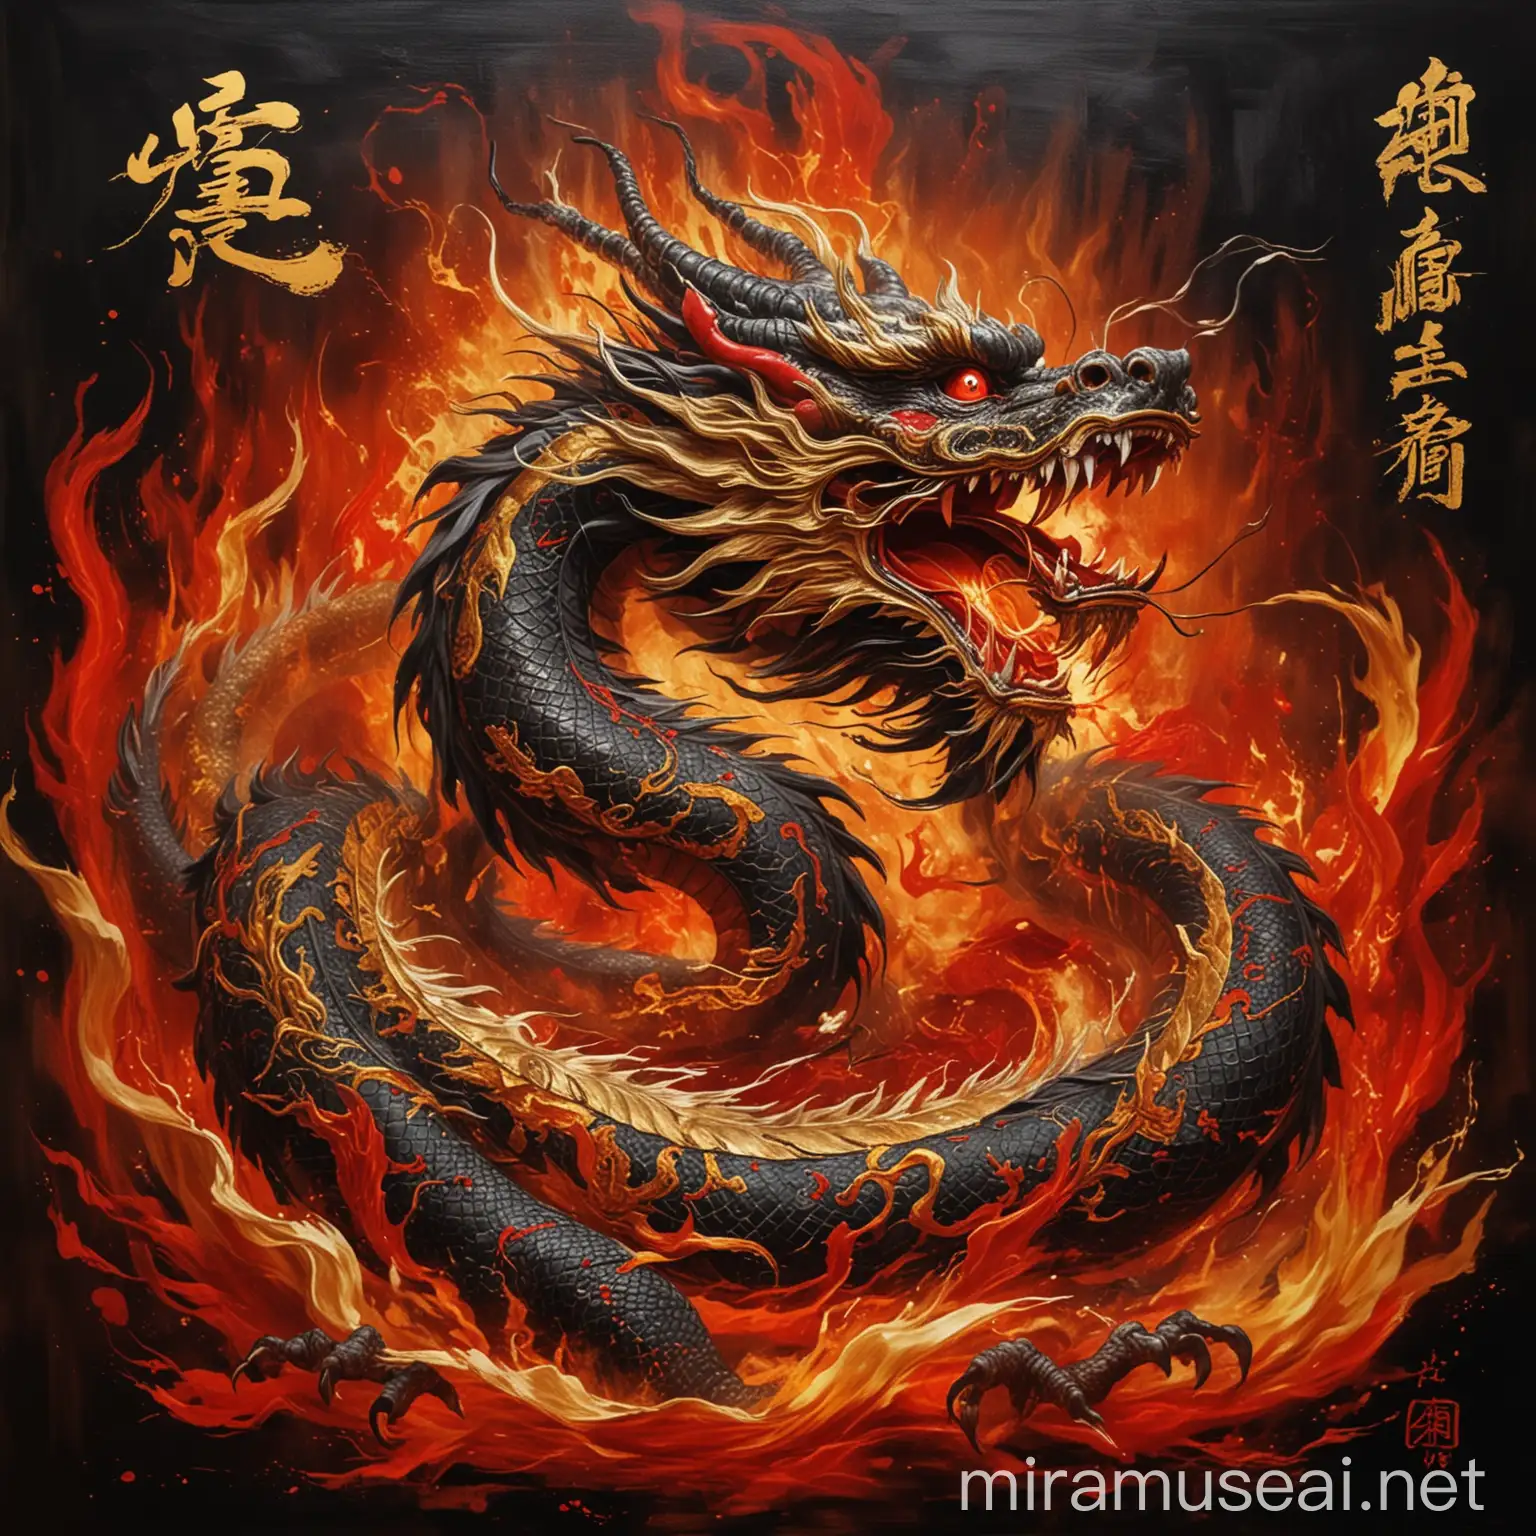 Dragón chino, pintura, dorado, negro, arte, antiguo, rojo, fuego, idioma chino 